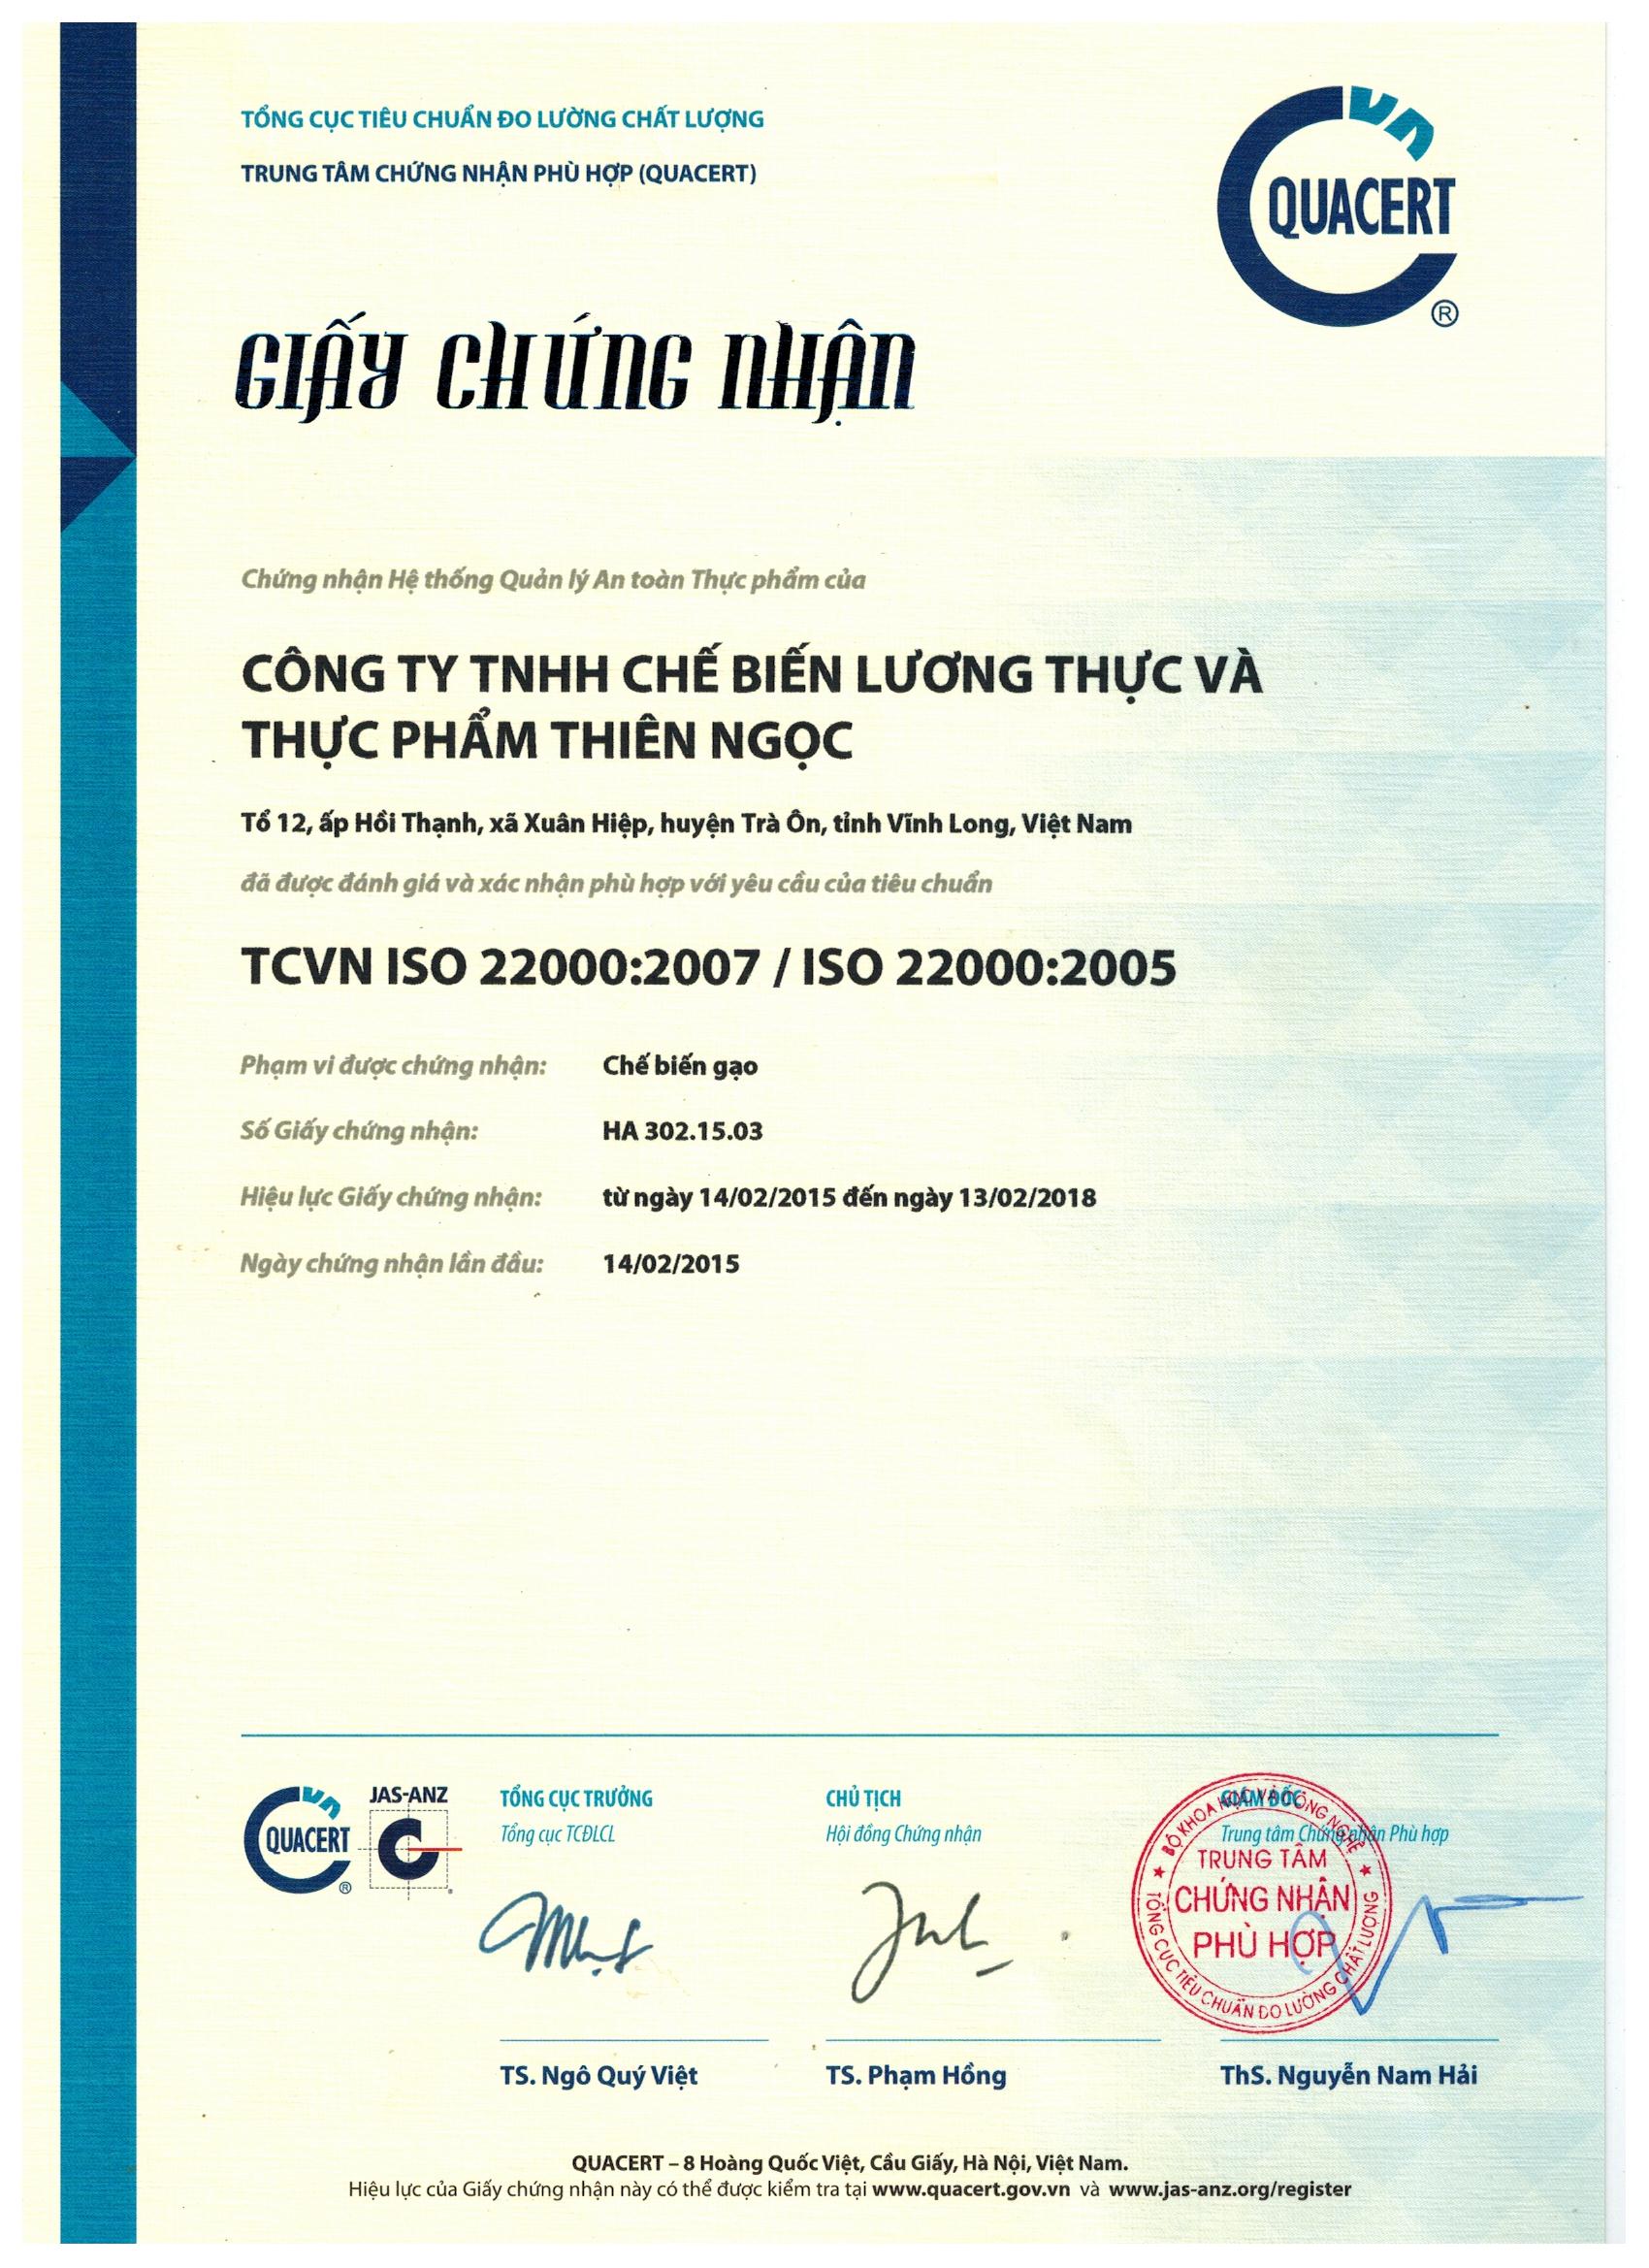 TCVN ISO 22000:2007/ISO 22000:2005